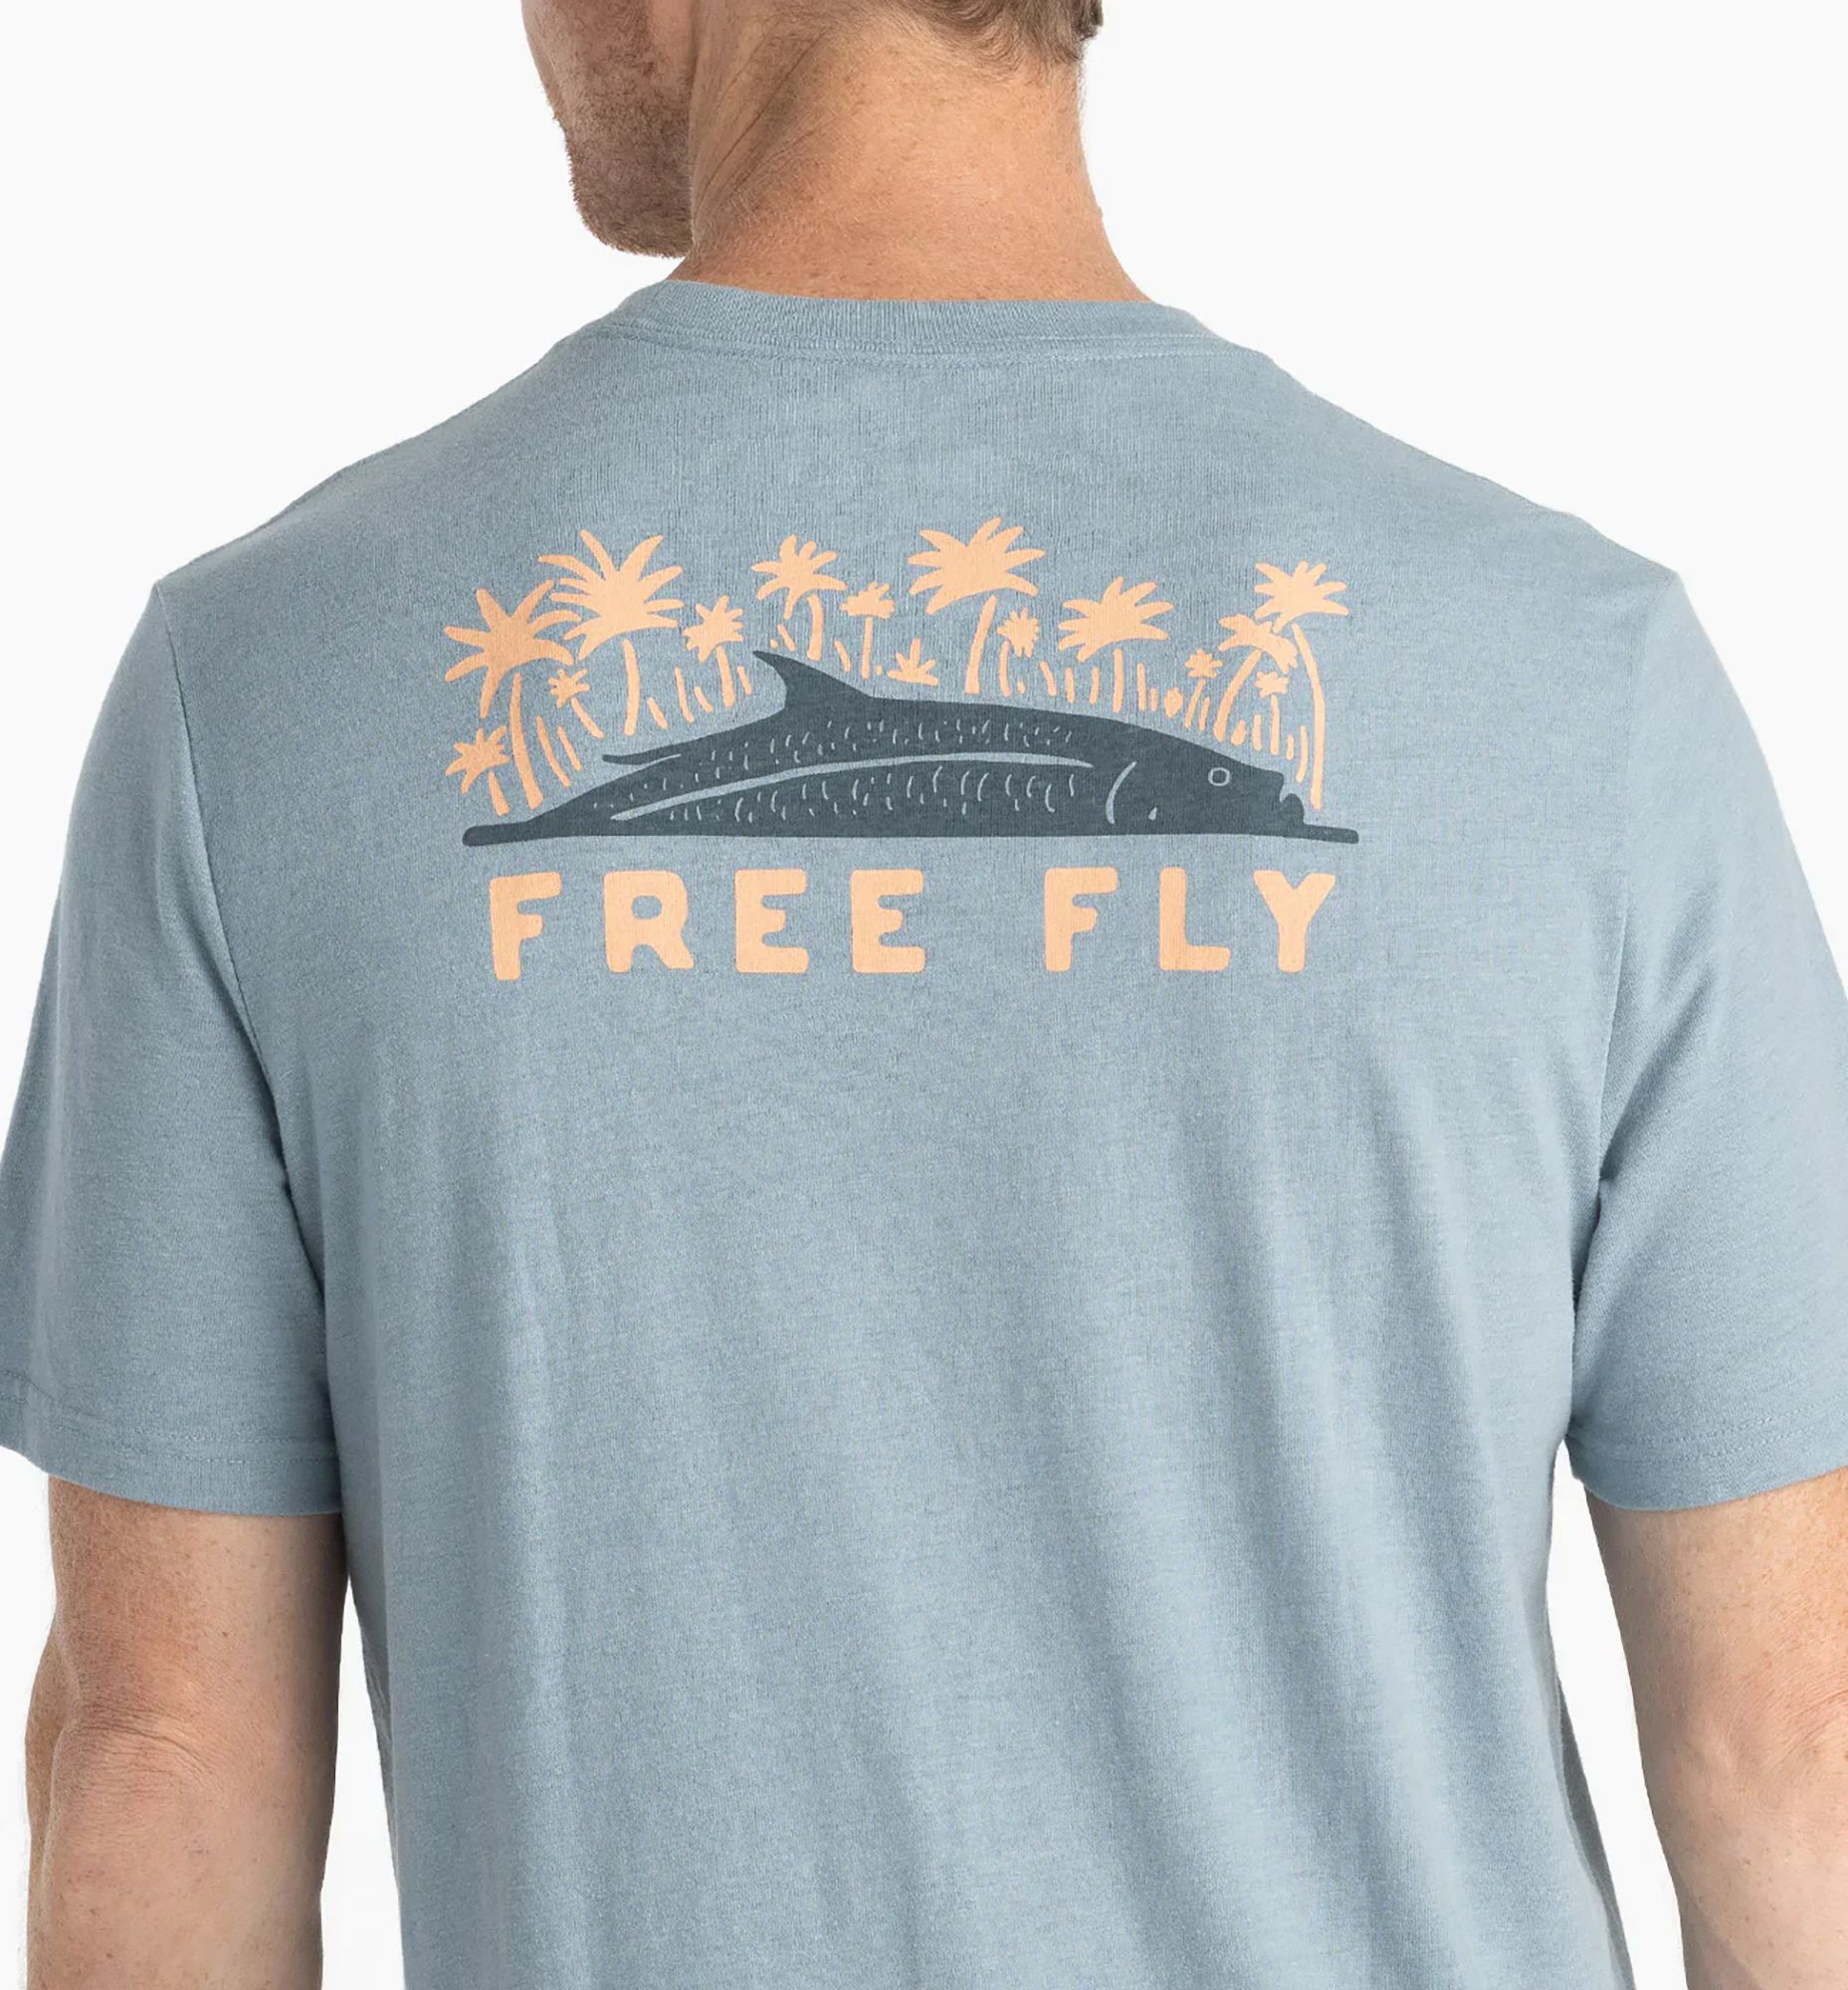 Dick's Sporting Goods Free Fly Men's Destination Angler T-Shirt